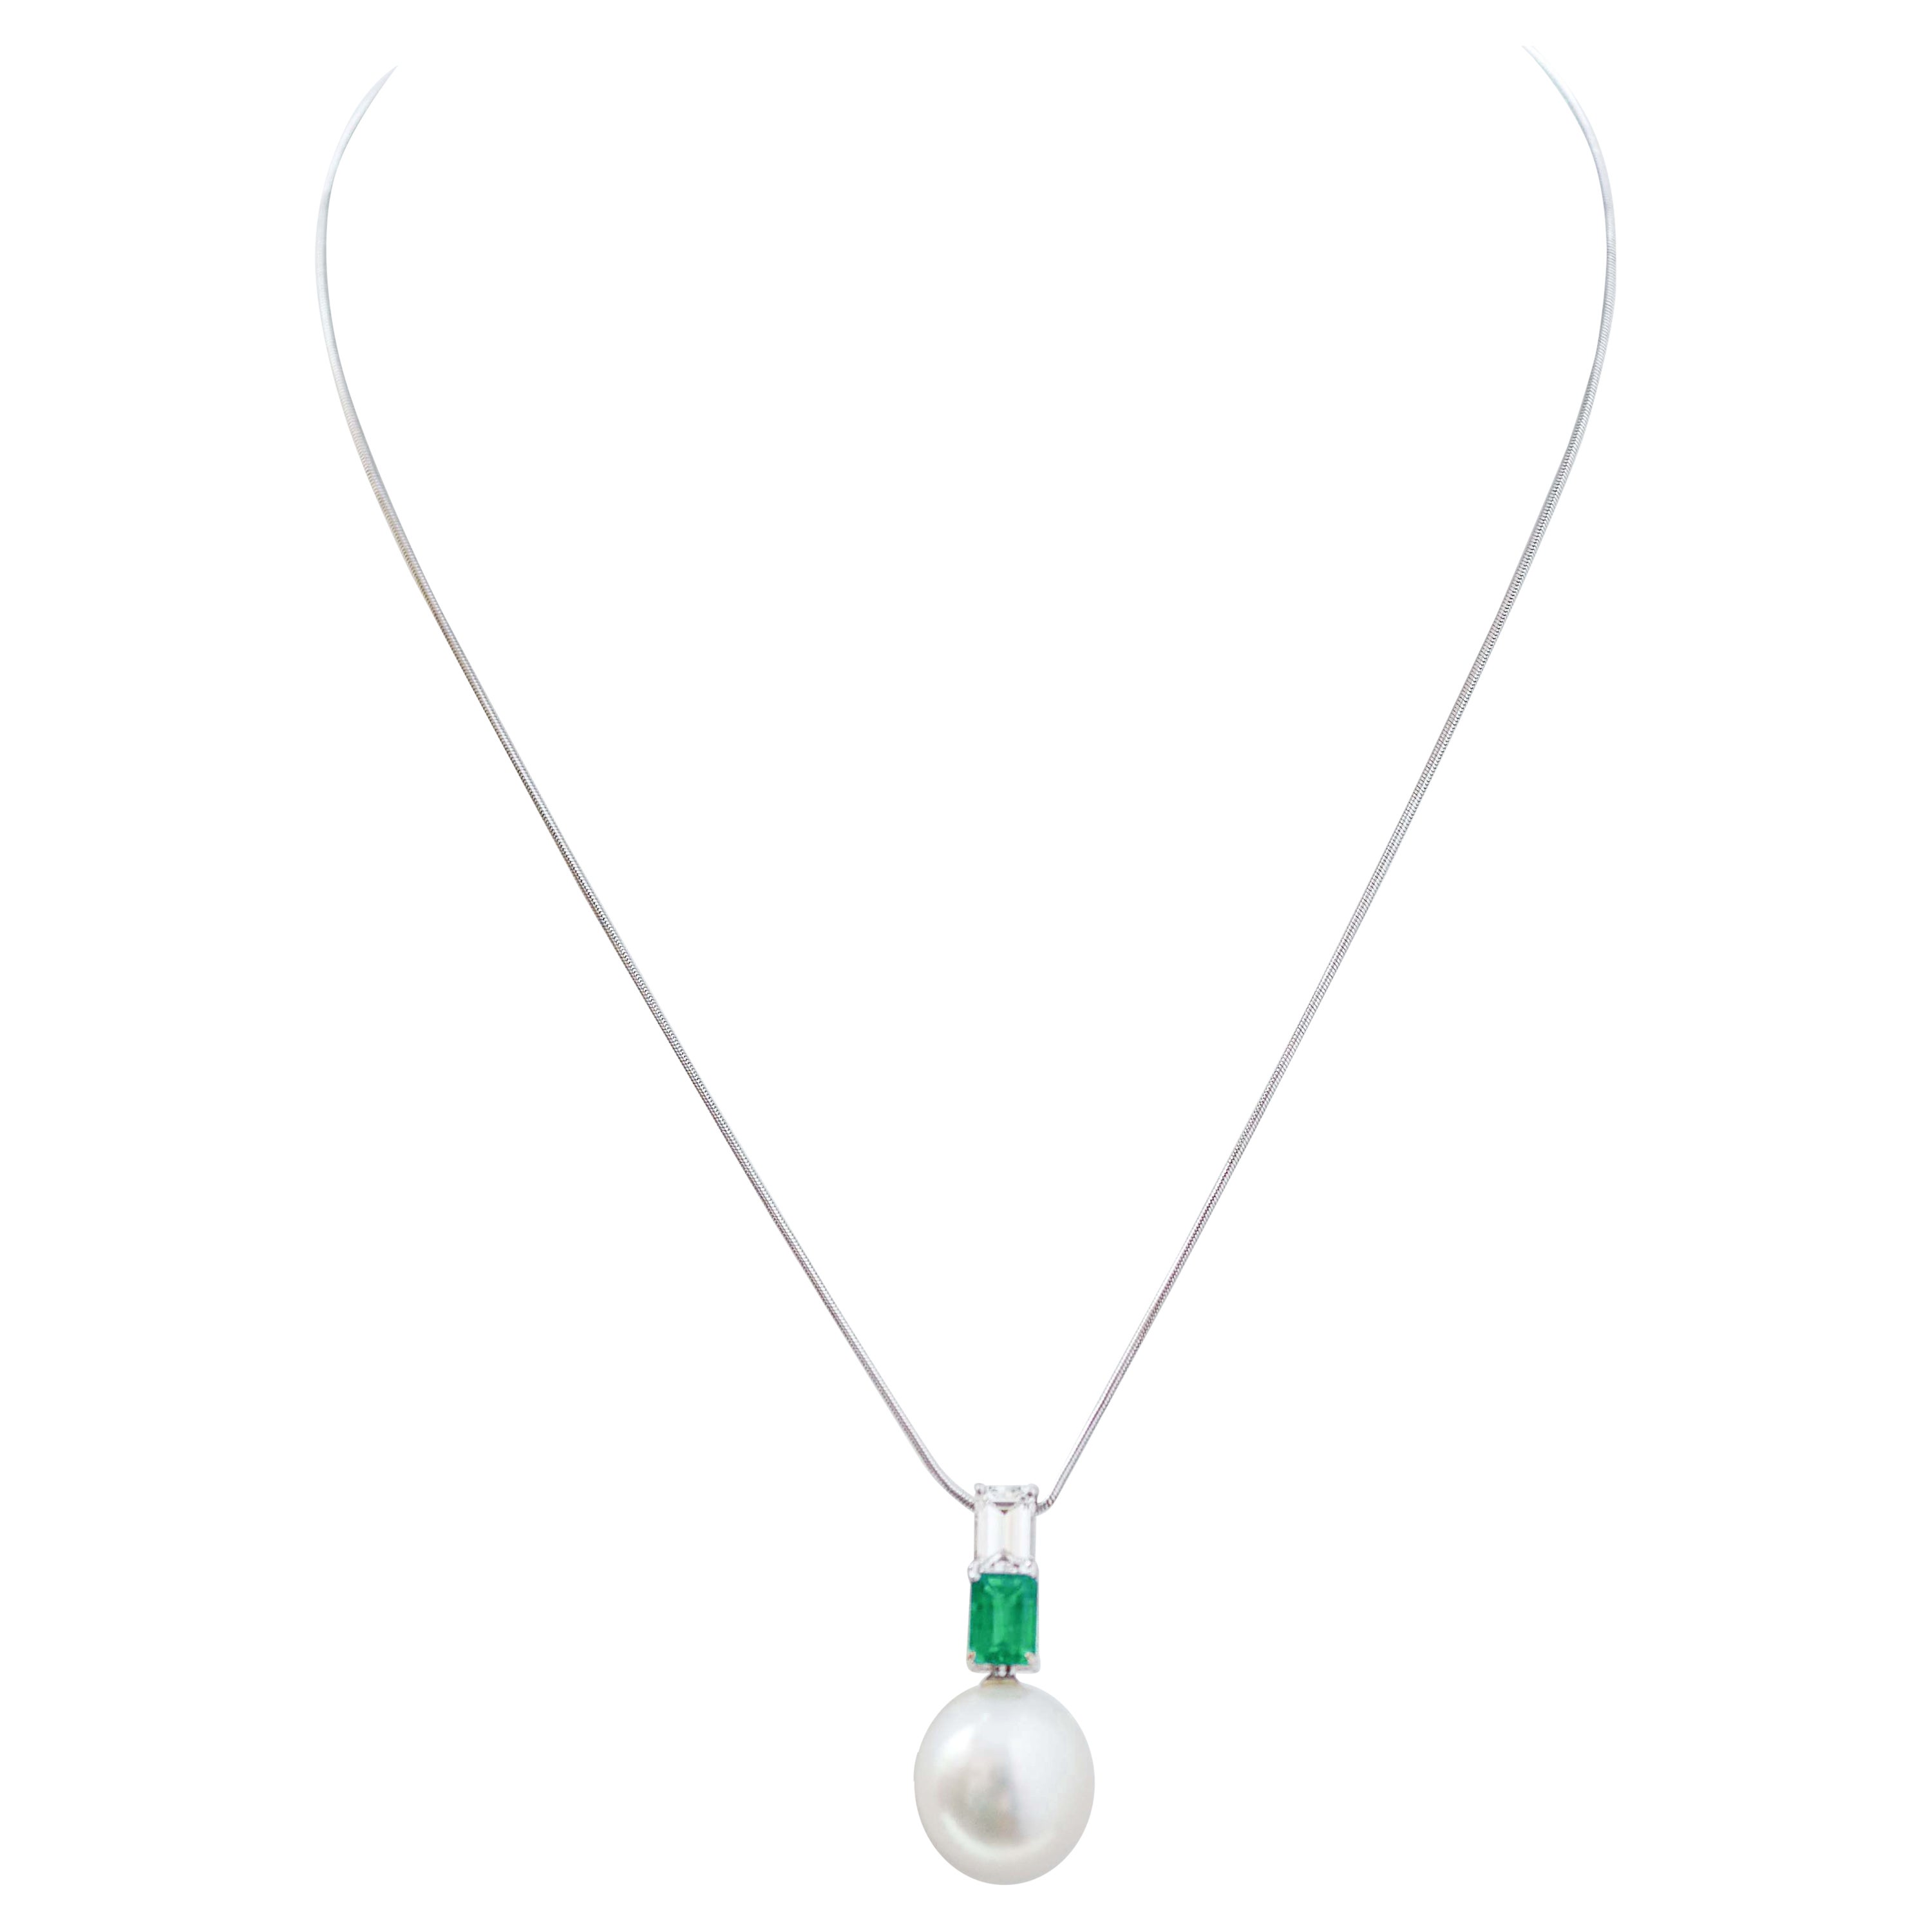 Pearl, Emerald, Diamonds, 18 Karat White Gold Pendant Necklace.